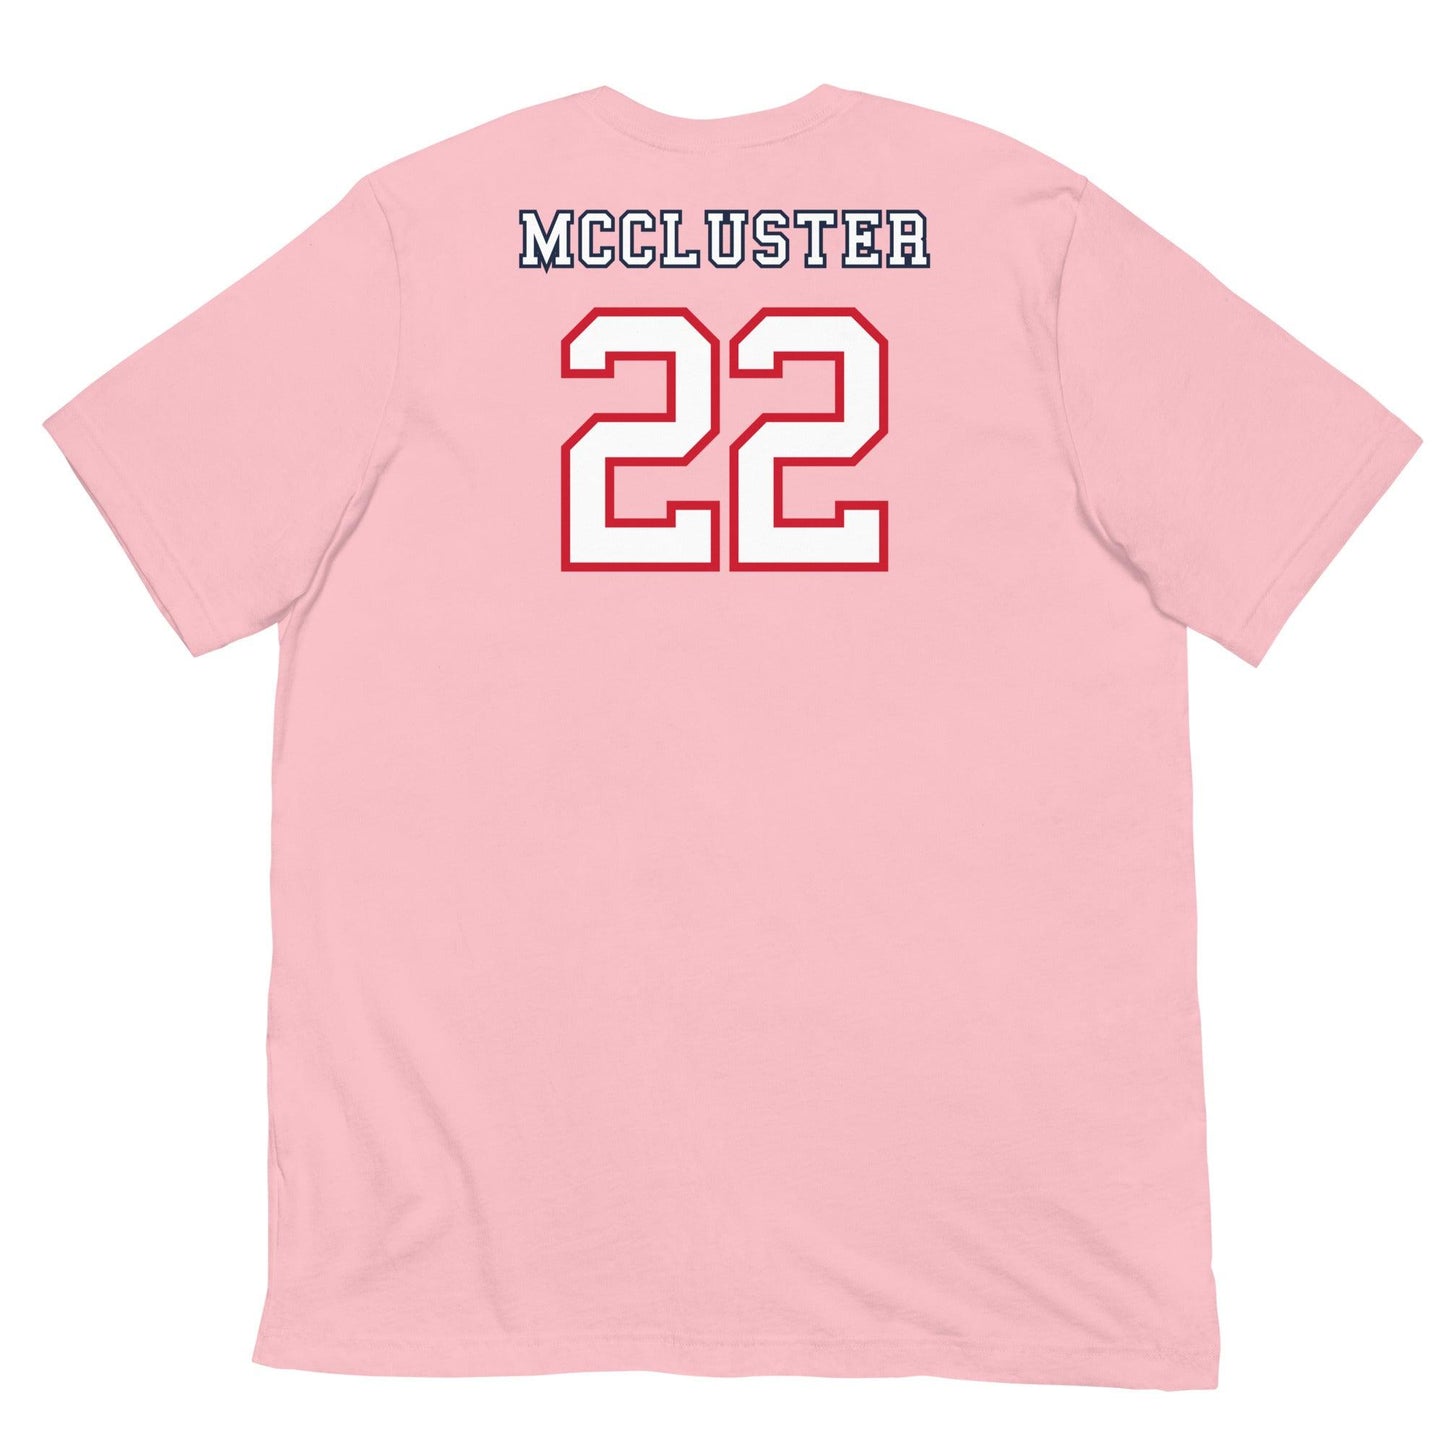 Dexter McCluster "Jersey" t-shirt - Fan Arch